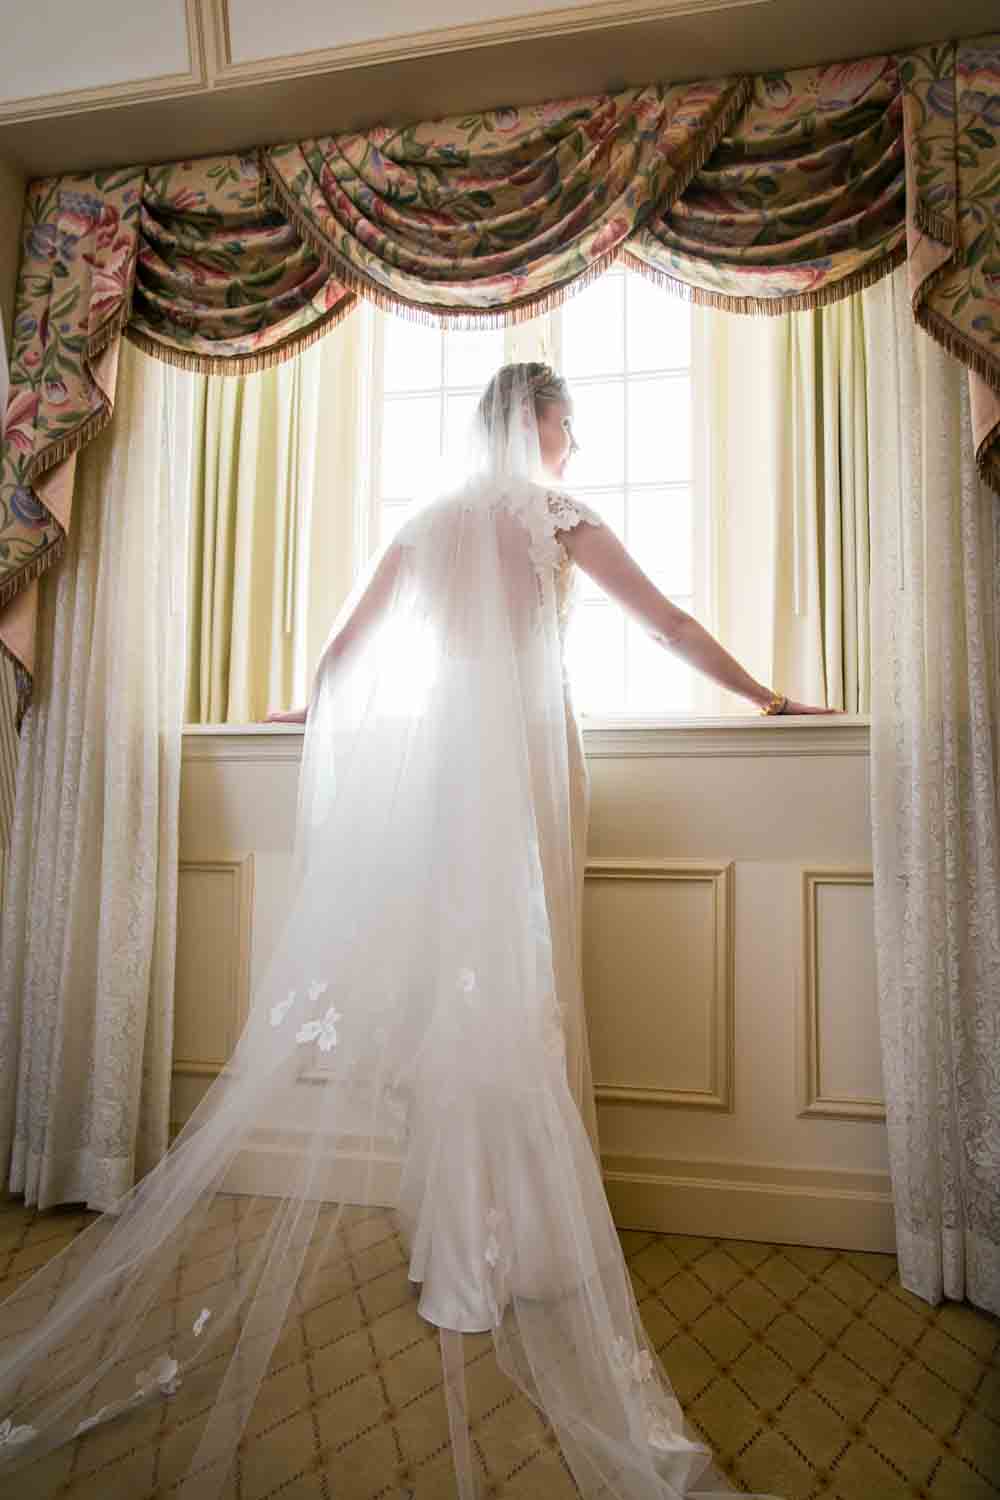 Bride wearing veil looking out window